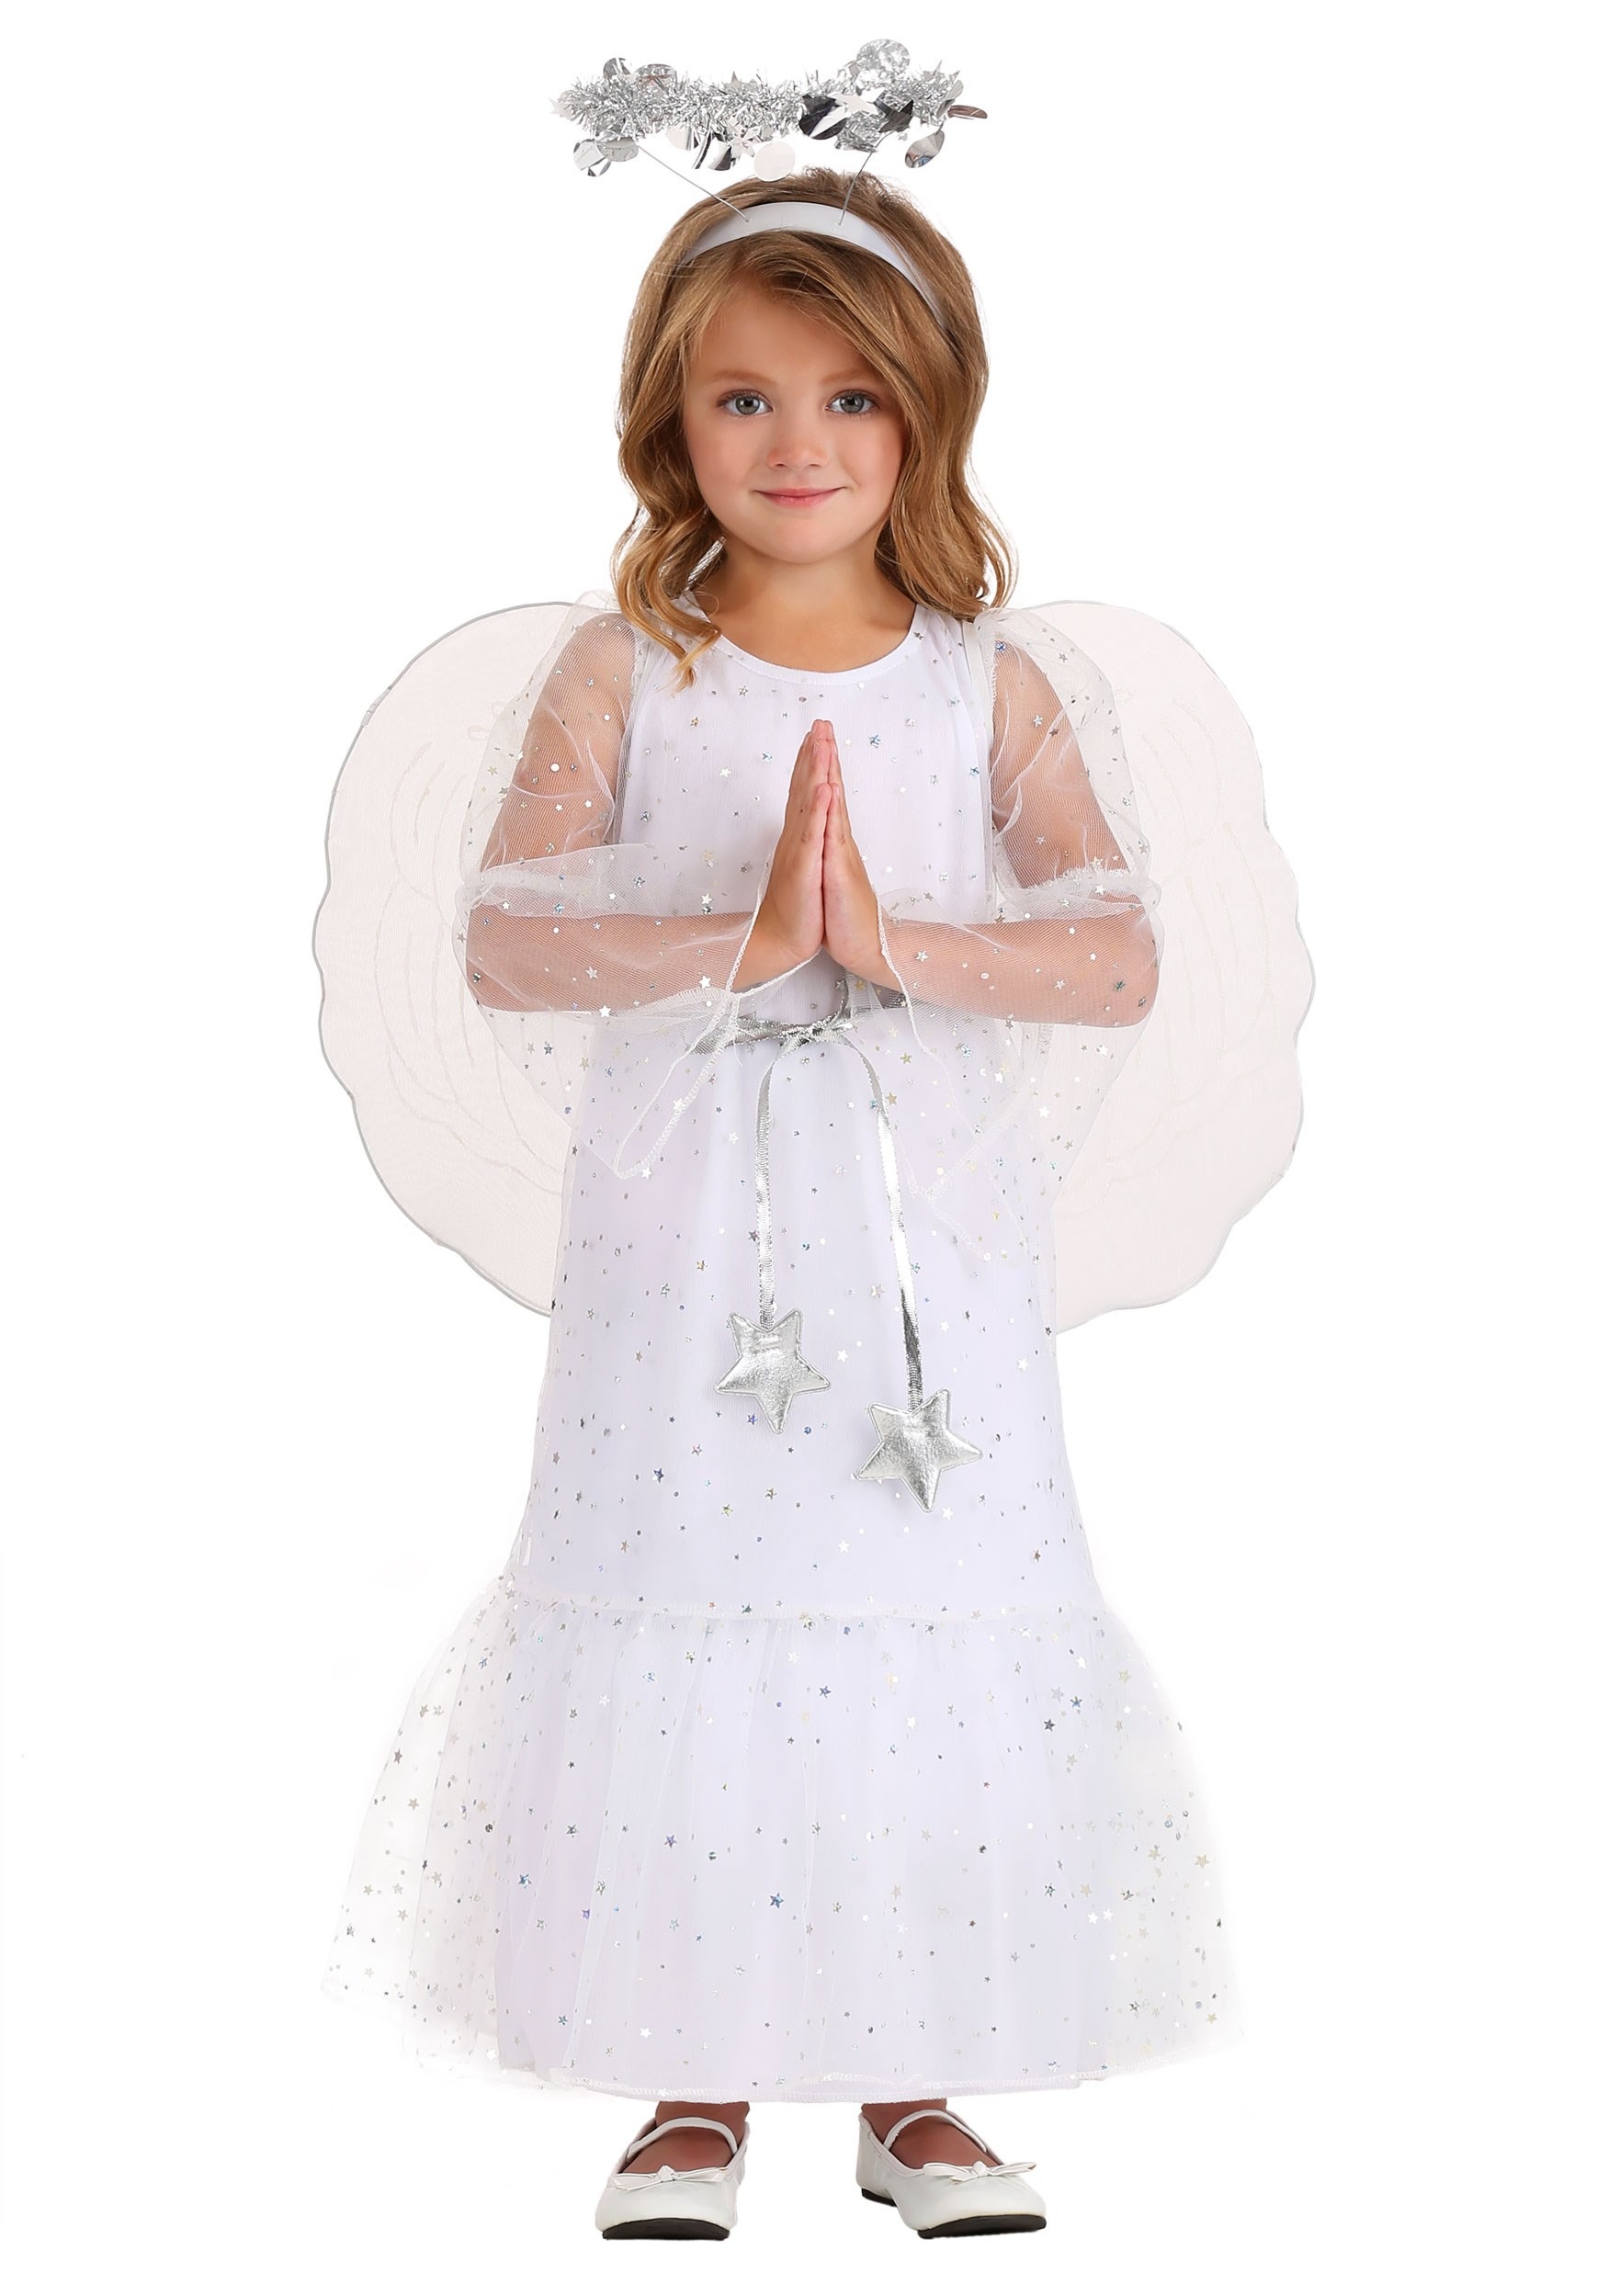 Girls Toddler Darling Angel Costume Dress